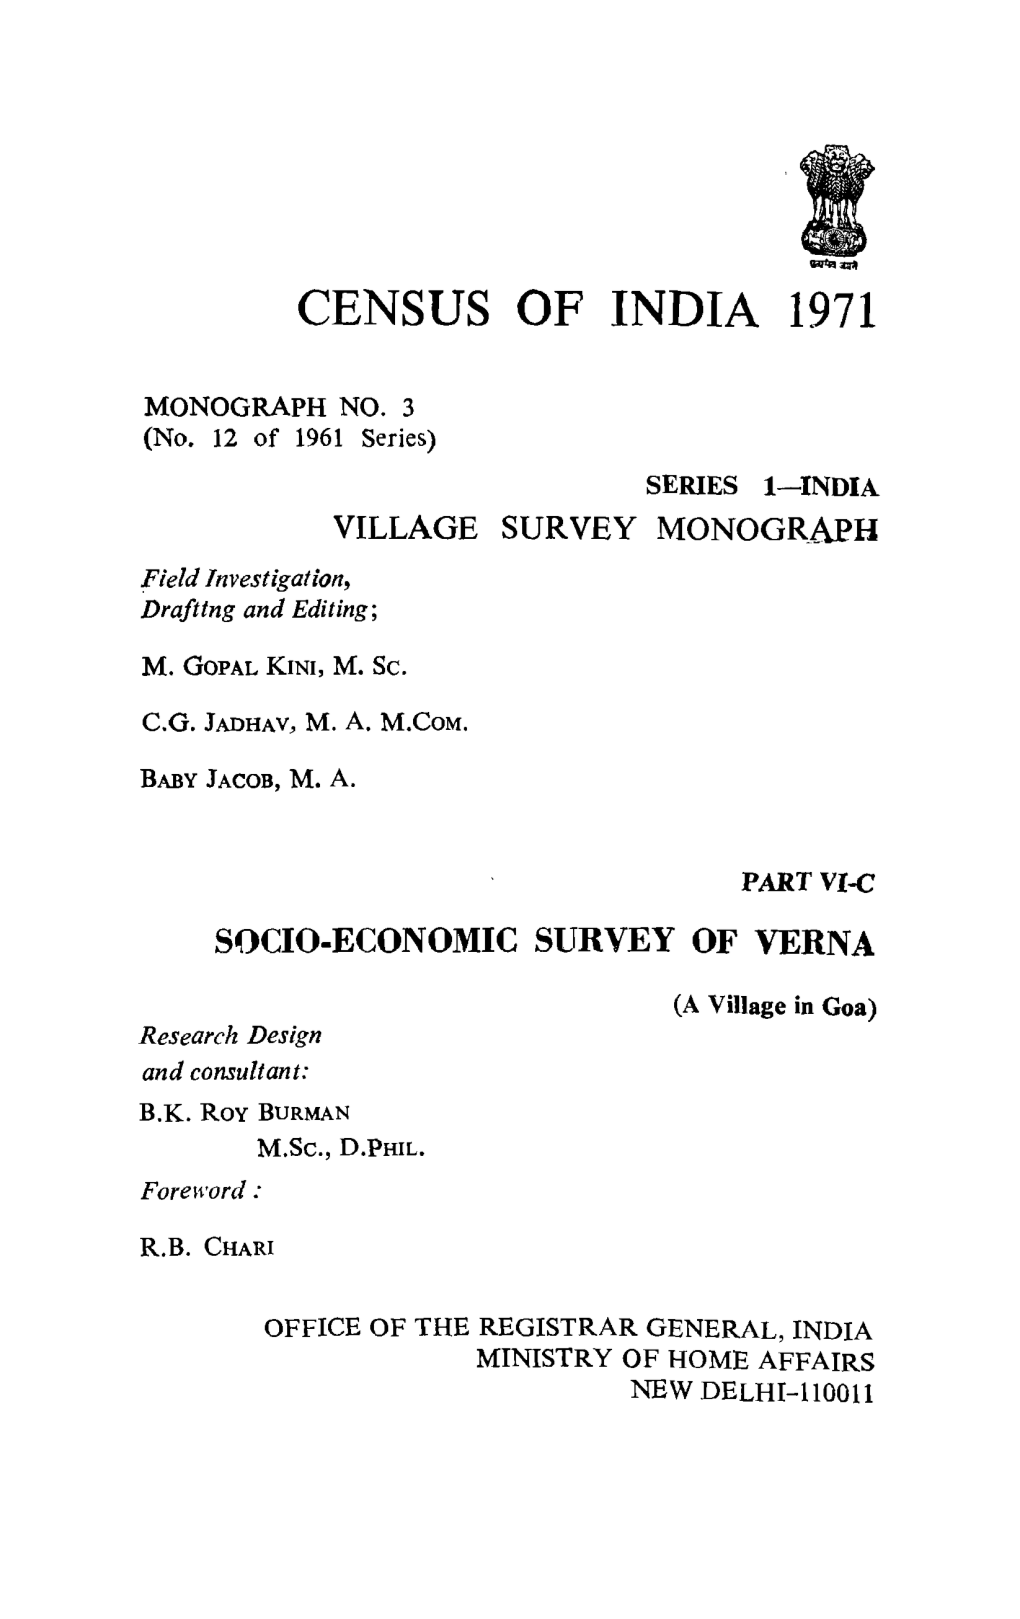 Village Survey Monograph, Socio-Economic Survey of Verna